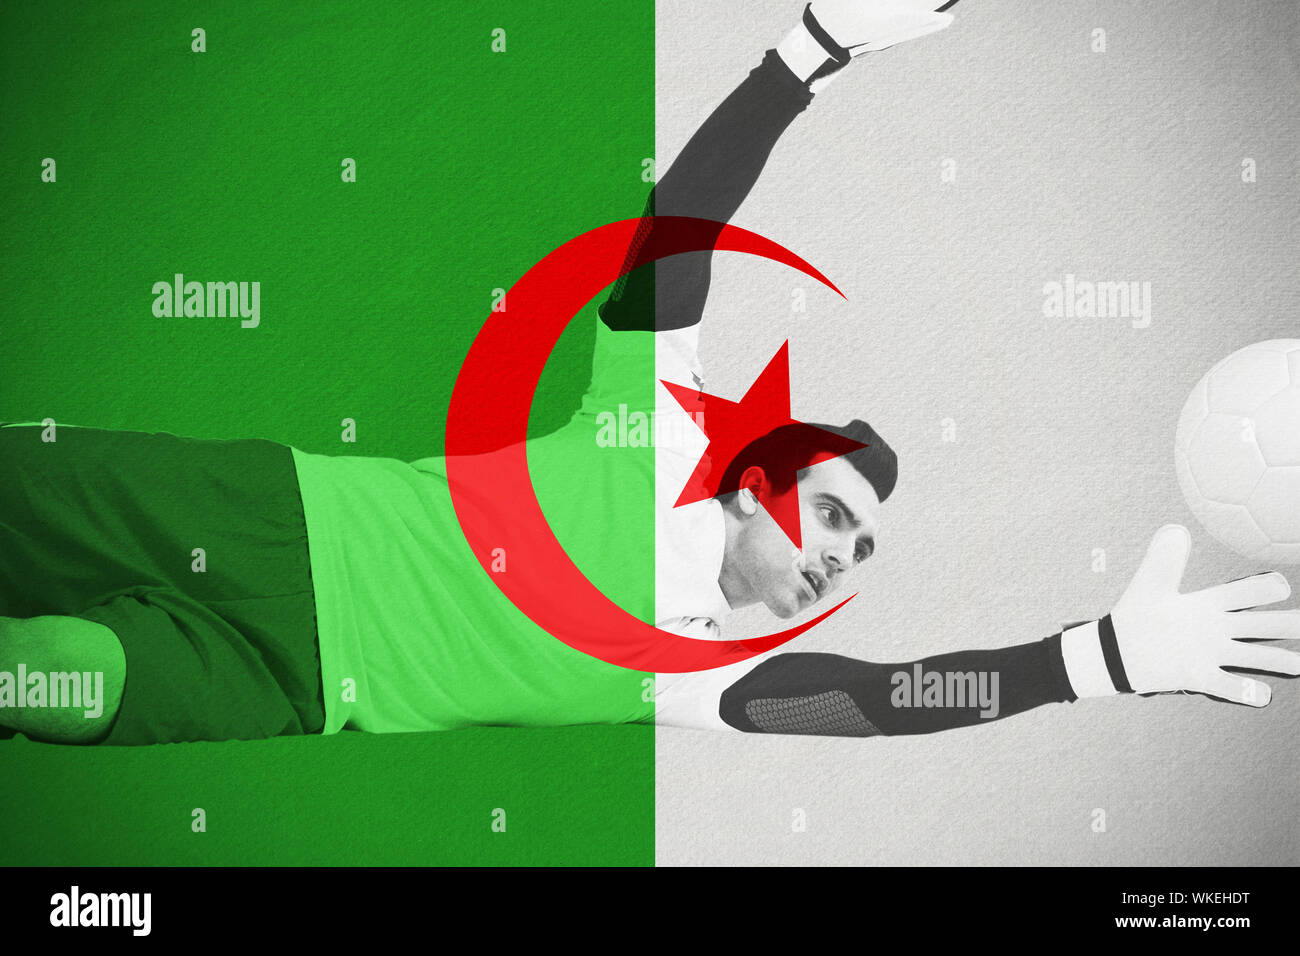 Goalkeeper in white making a save against algeria national flag Stock Photo